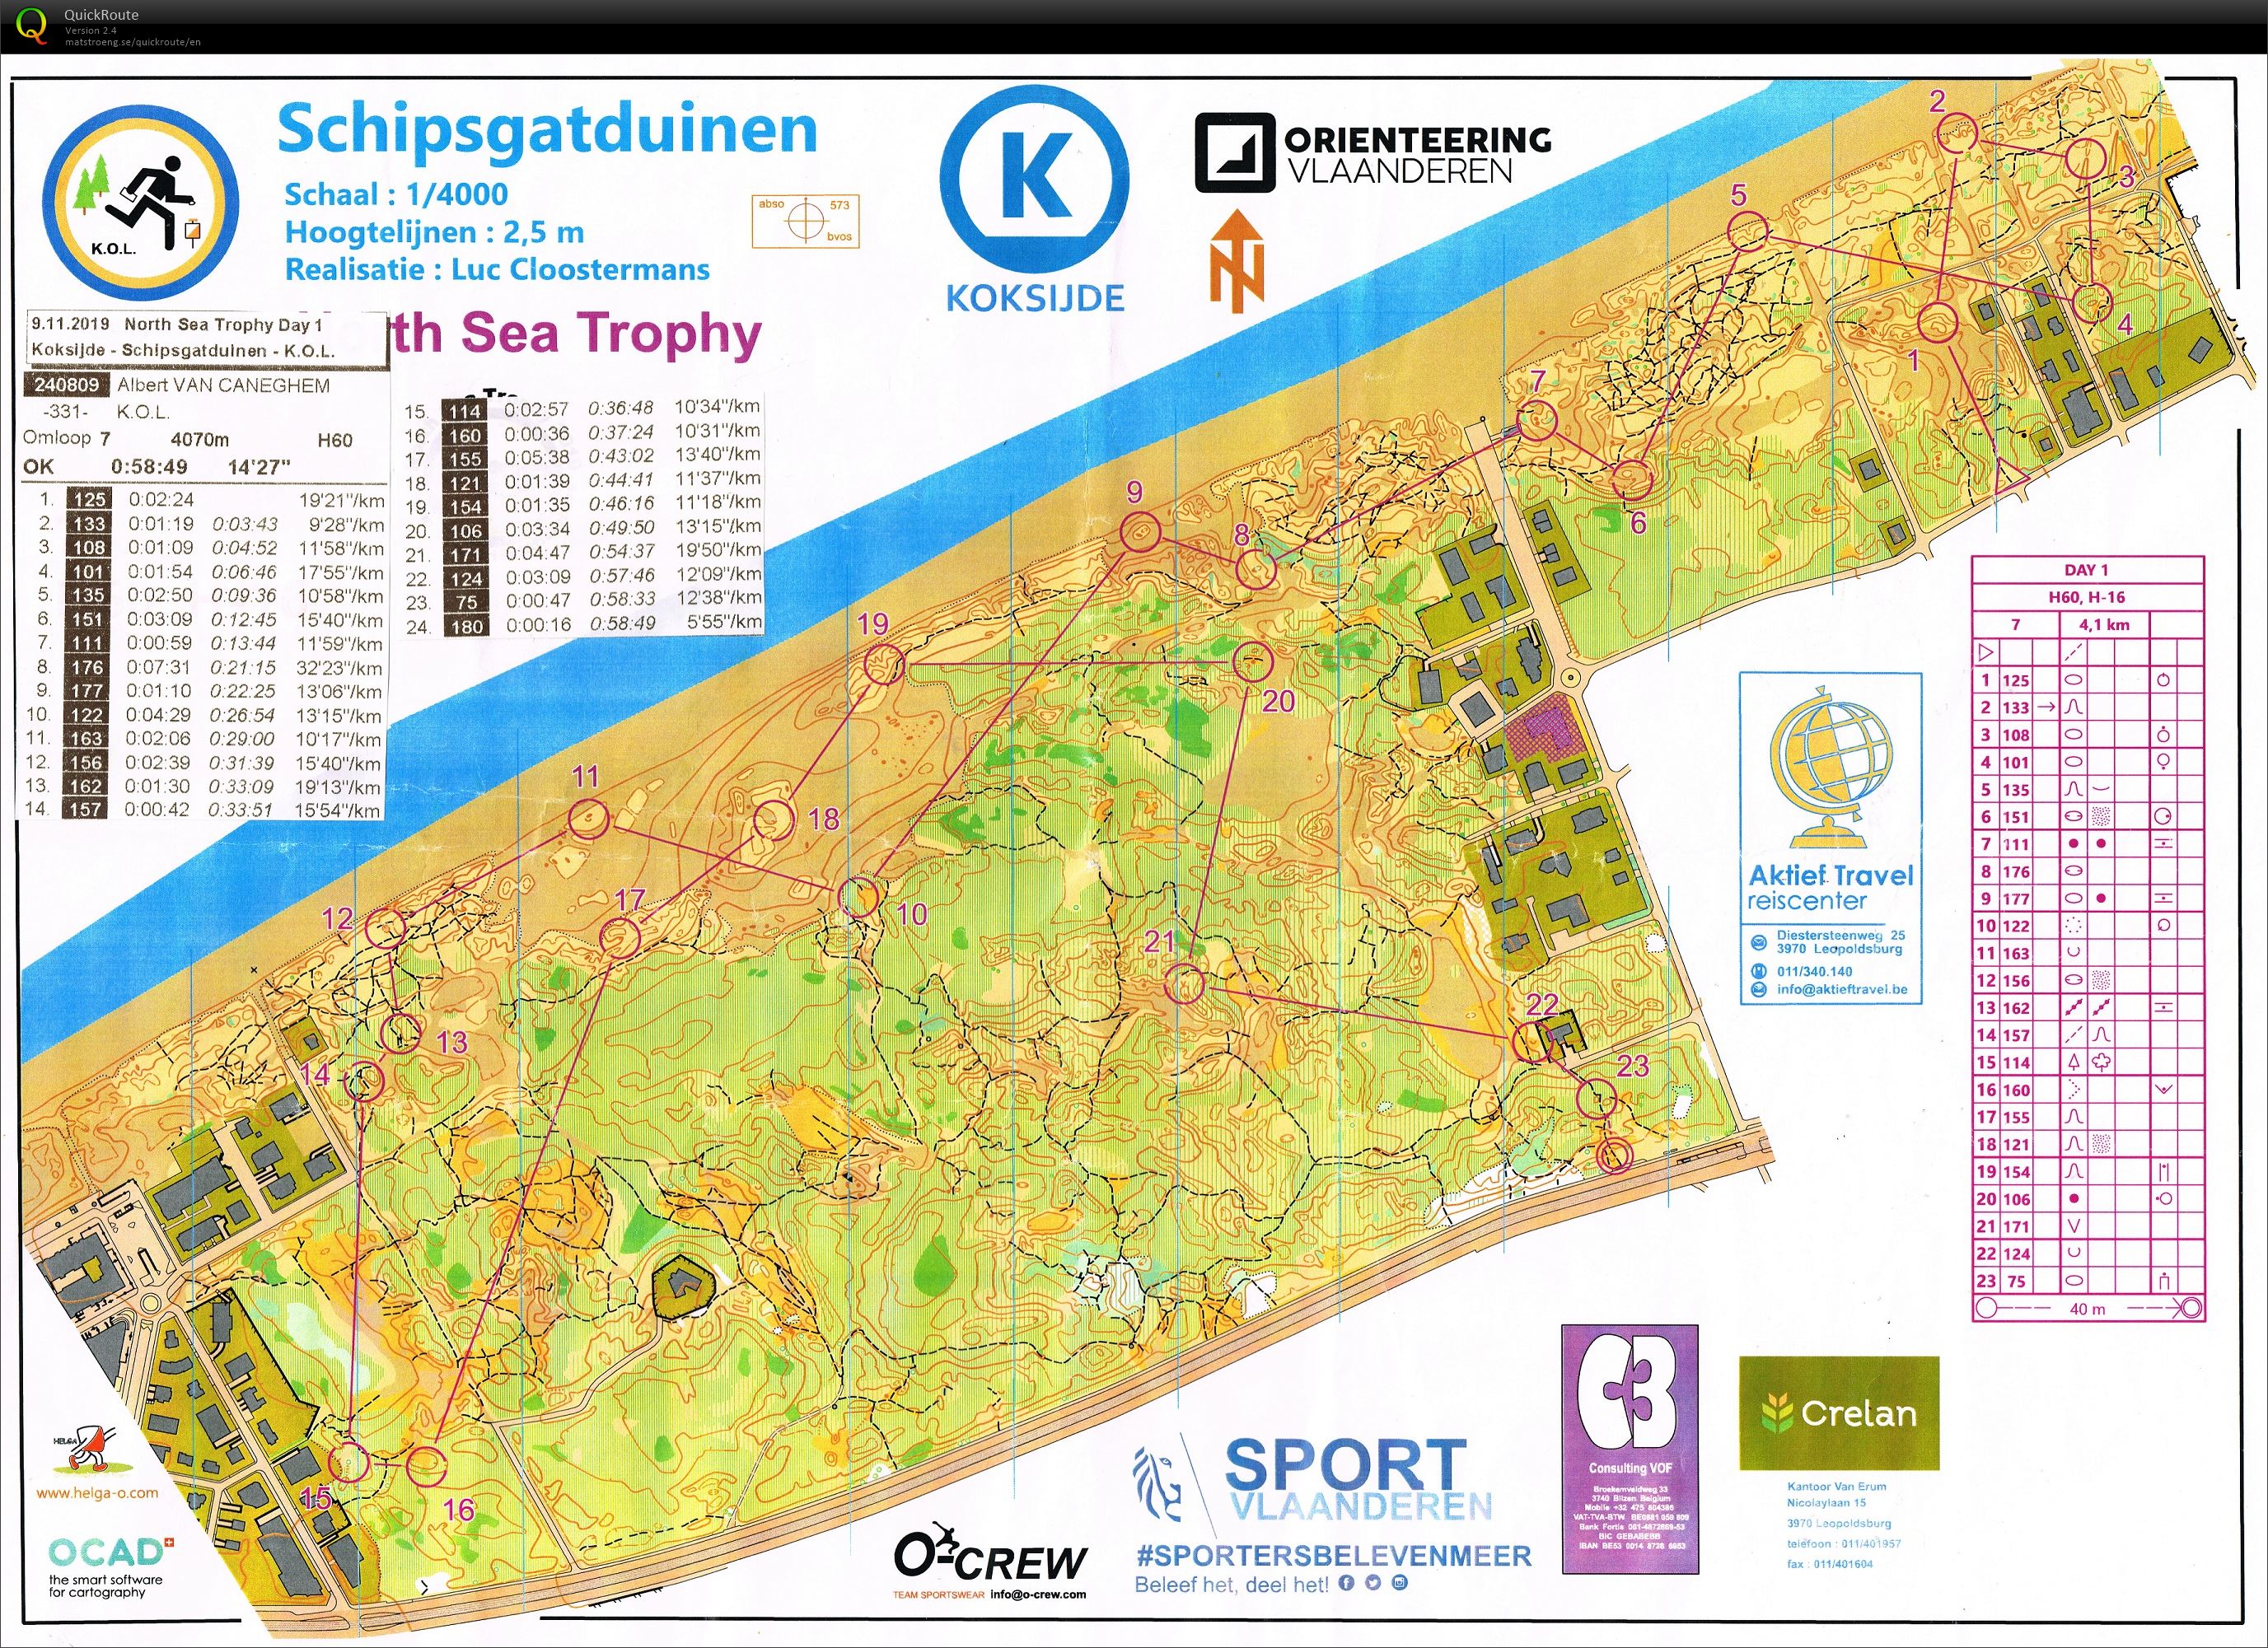 Schipsgatduinen North Sea Trophy D1 (09-11-2019)